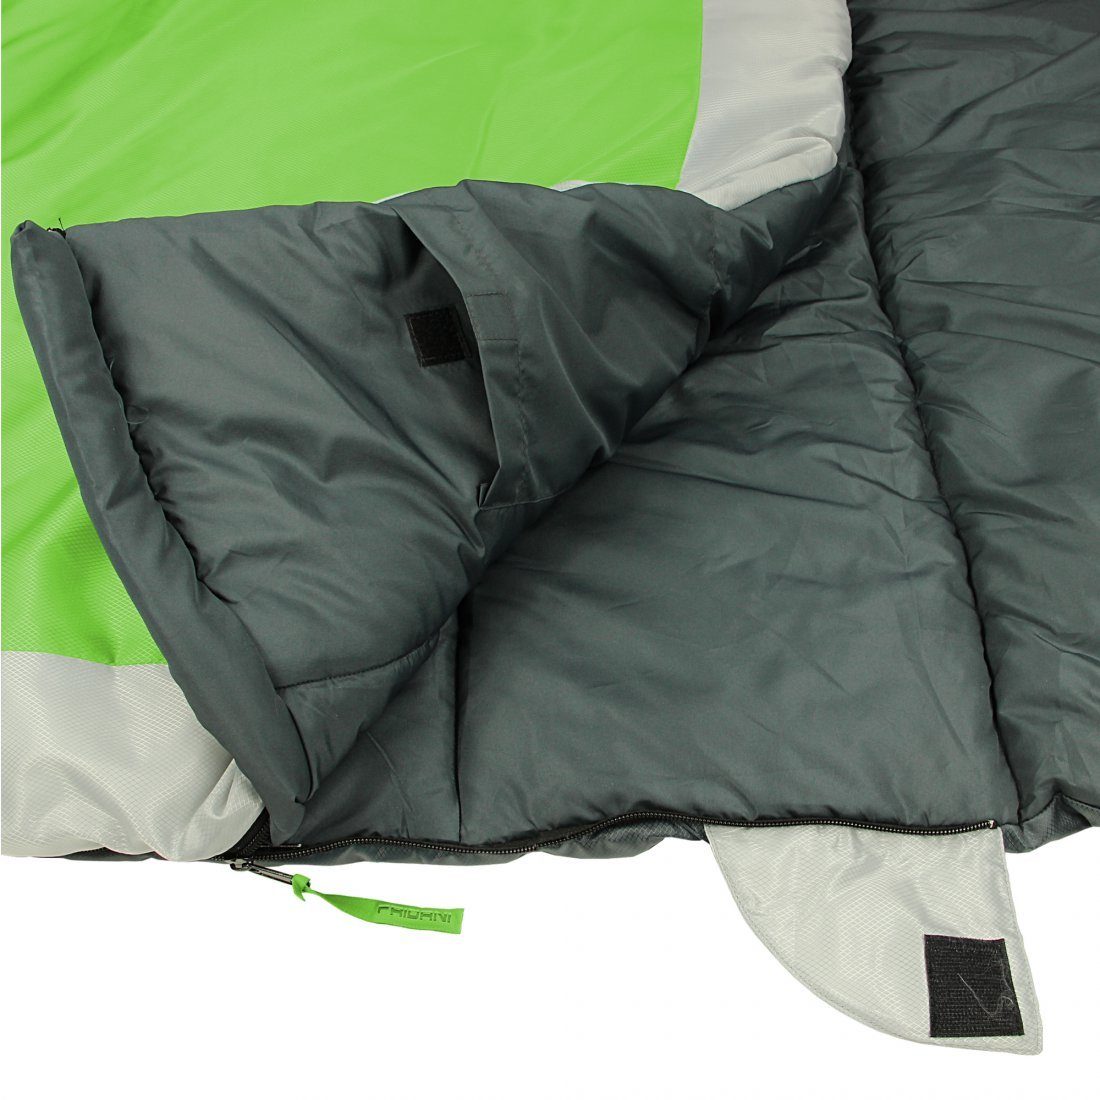 FRIDANI Deckenschlafsack QG Grün wasserabweisend Deckenschlafsack warm Kinderschlafsack 170x70